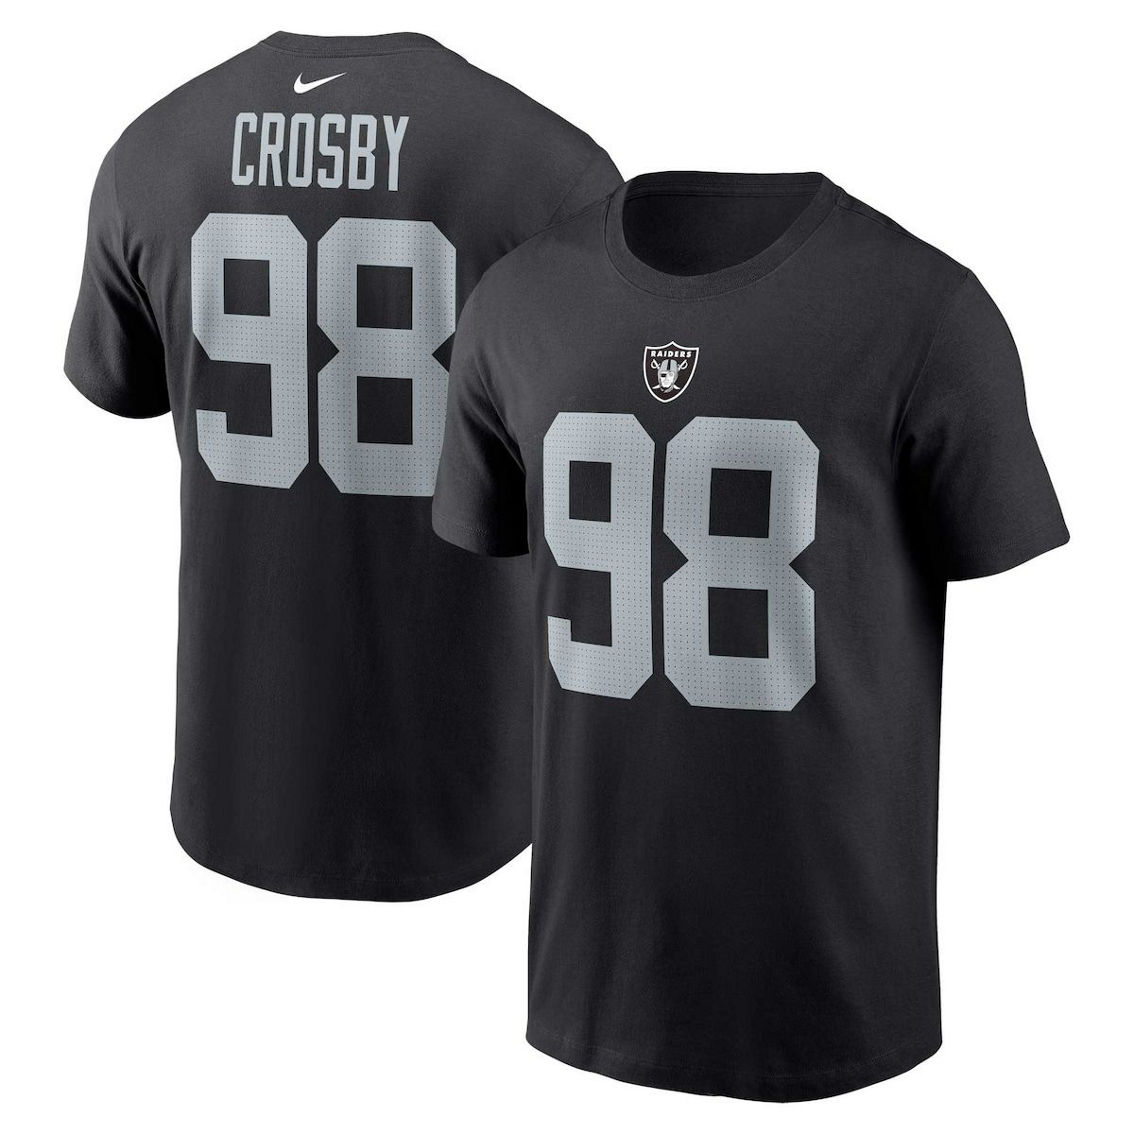 Nike Men's Maxx Crosby Black Las Vegas Raiders Player Name & Number T-Shirt - Image 2 of 4